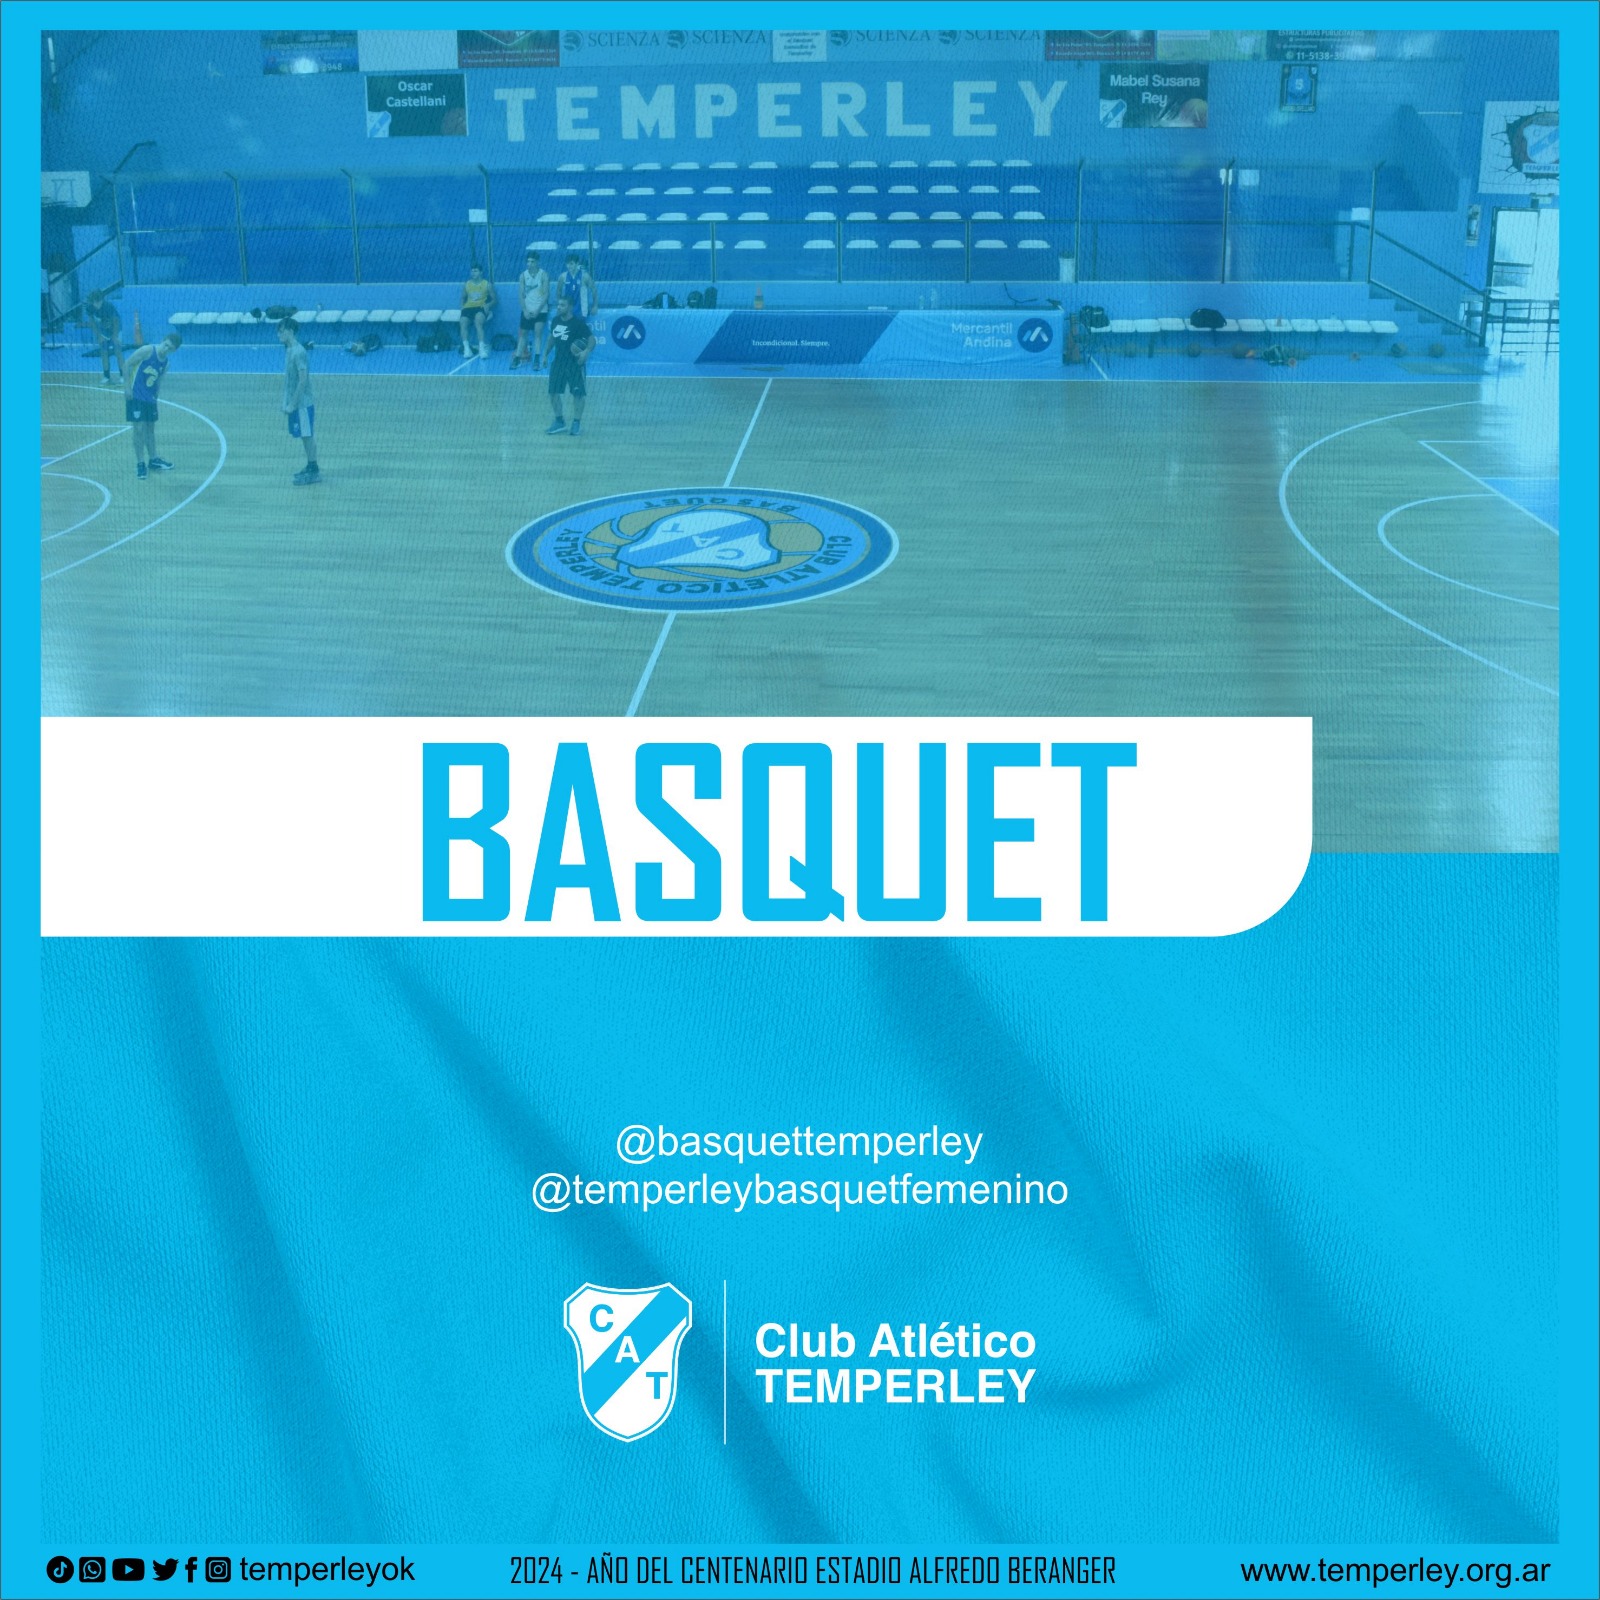 basquet temperley